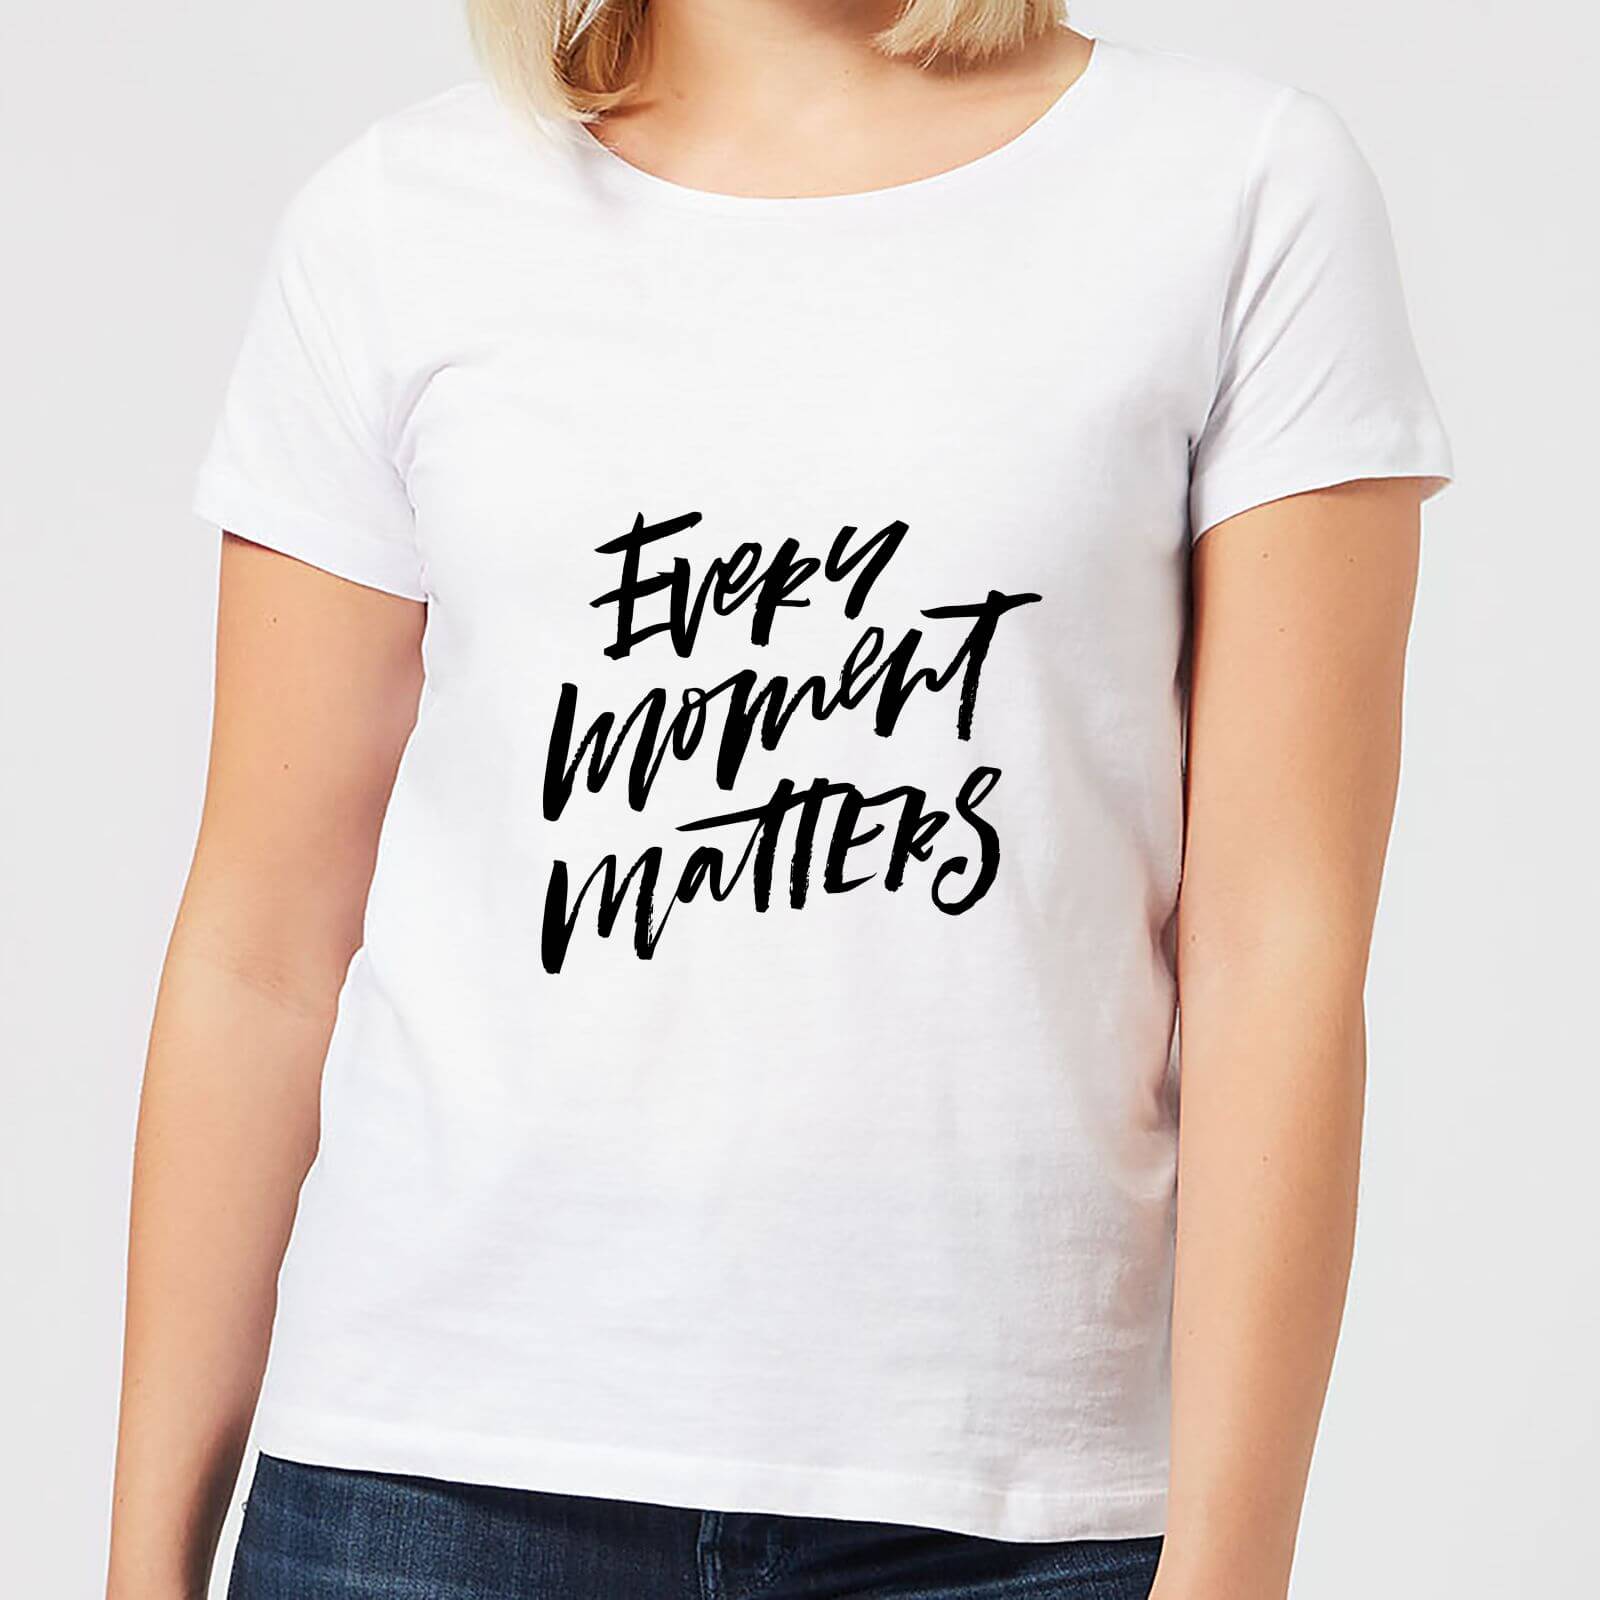 Every Moment Matters Women's T-Shirt - White - S - White